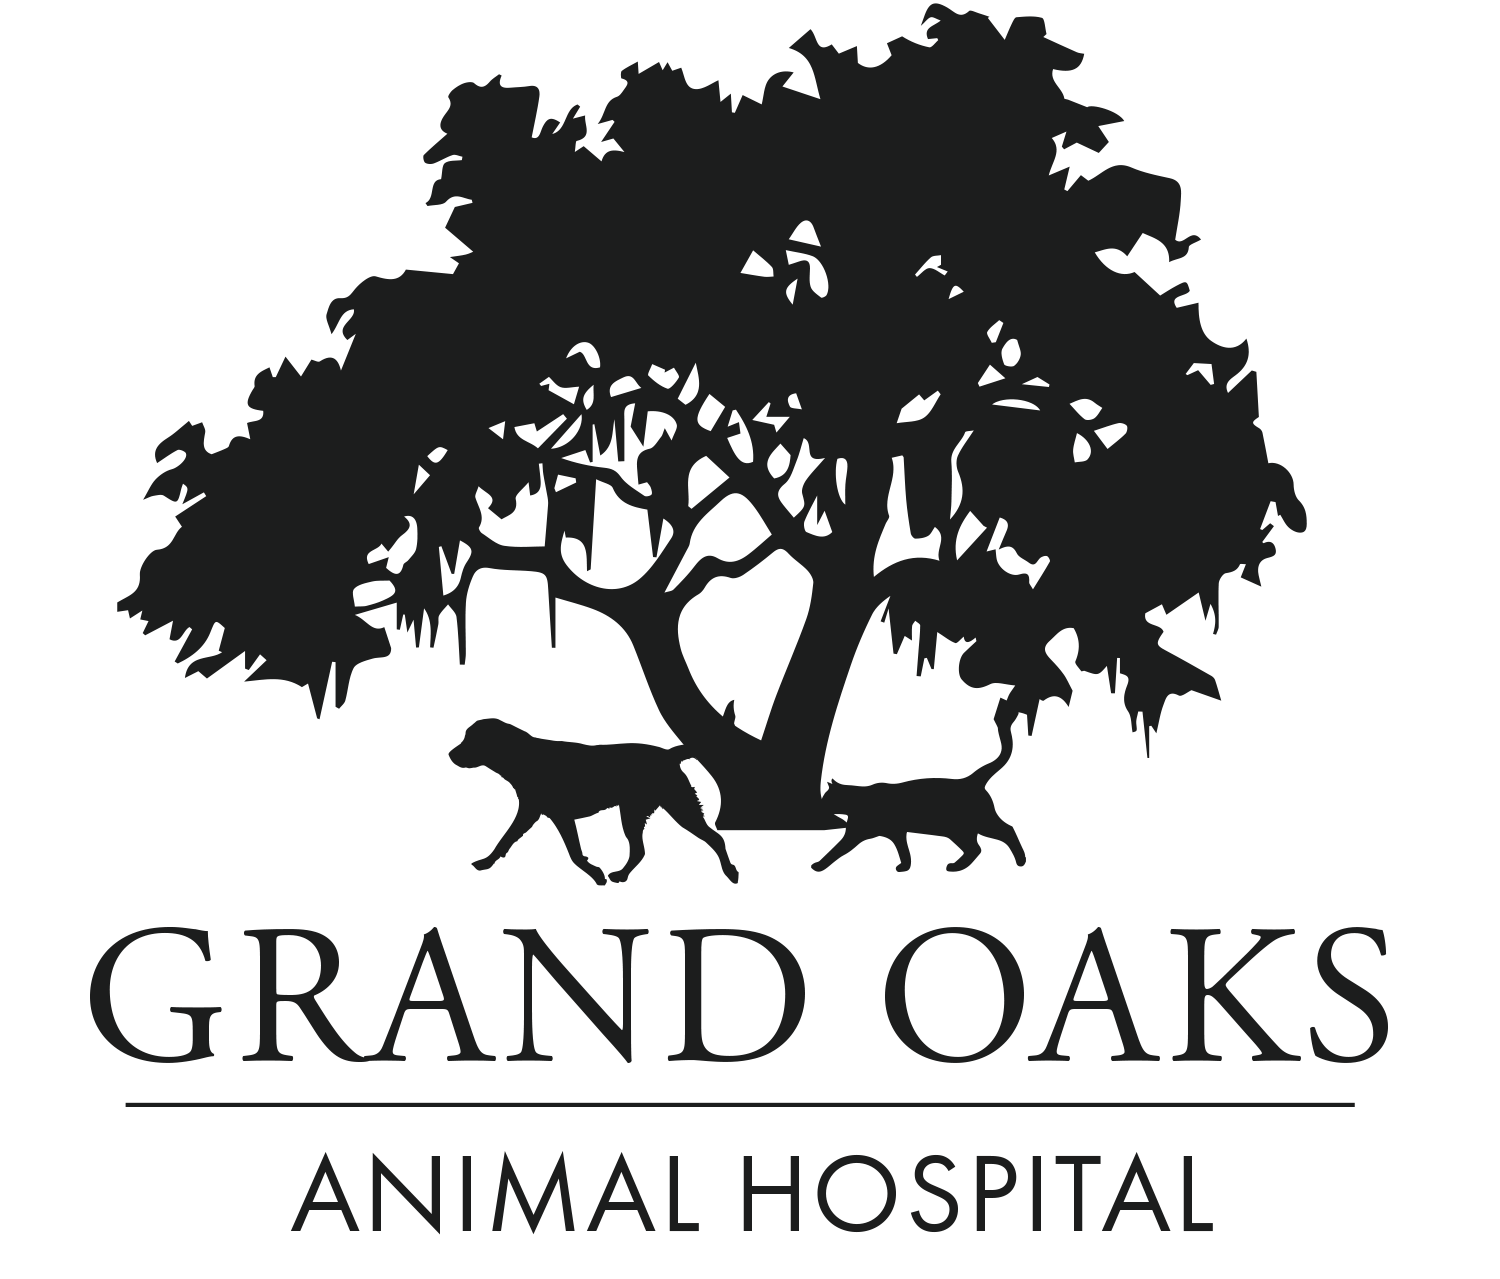 Grand Oaks Logo